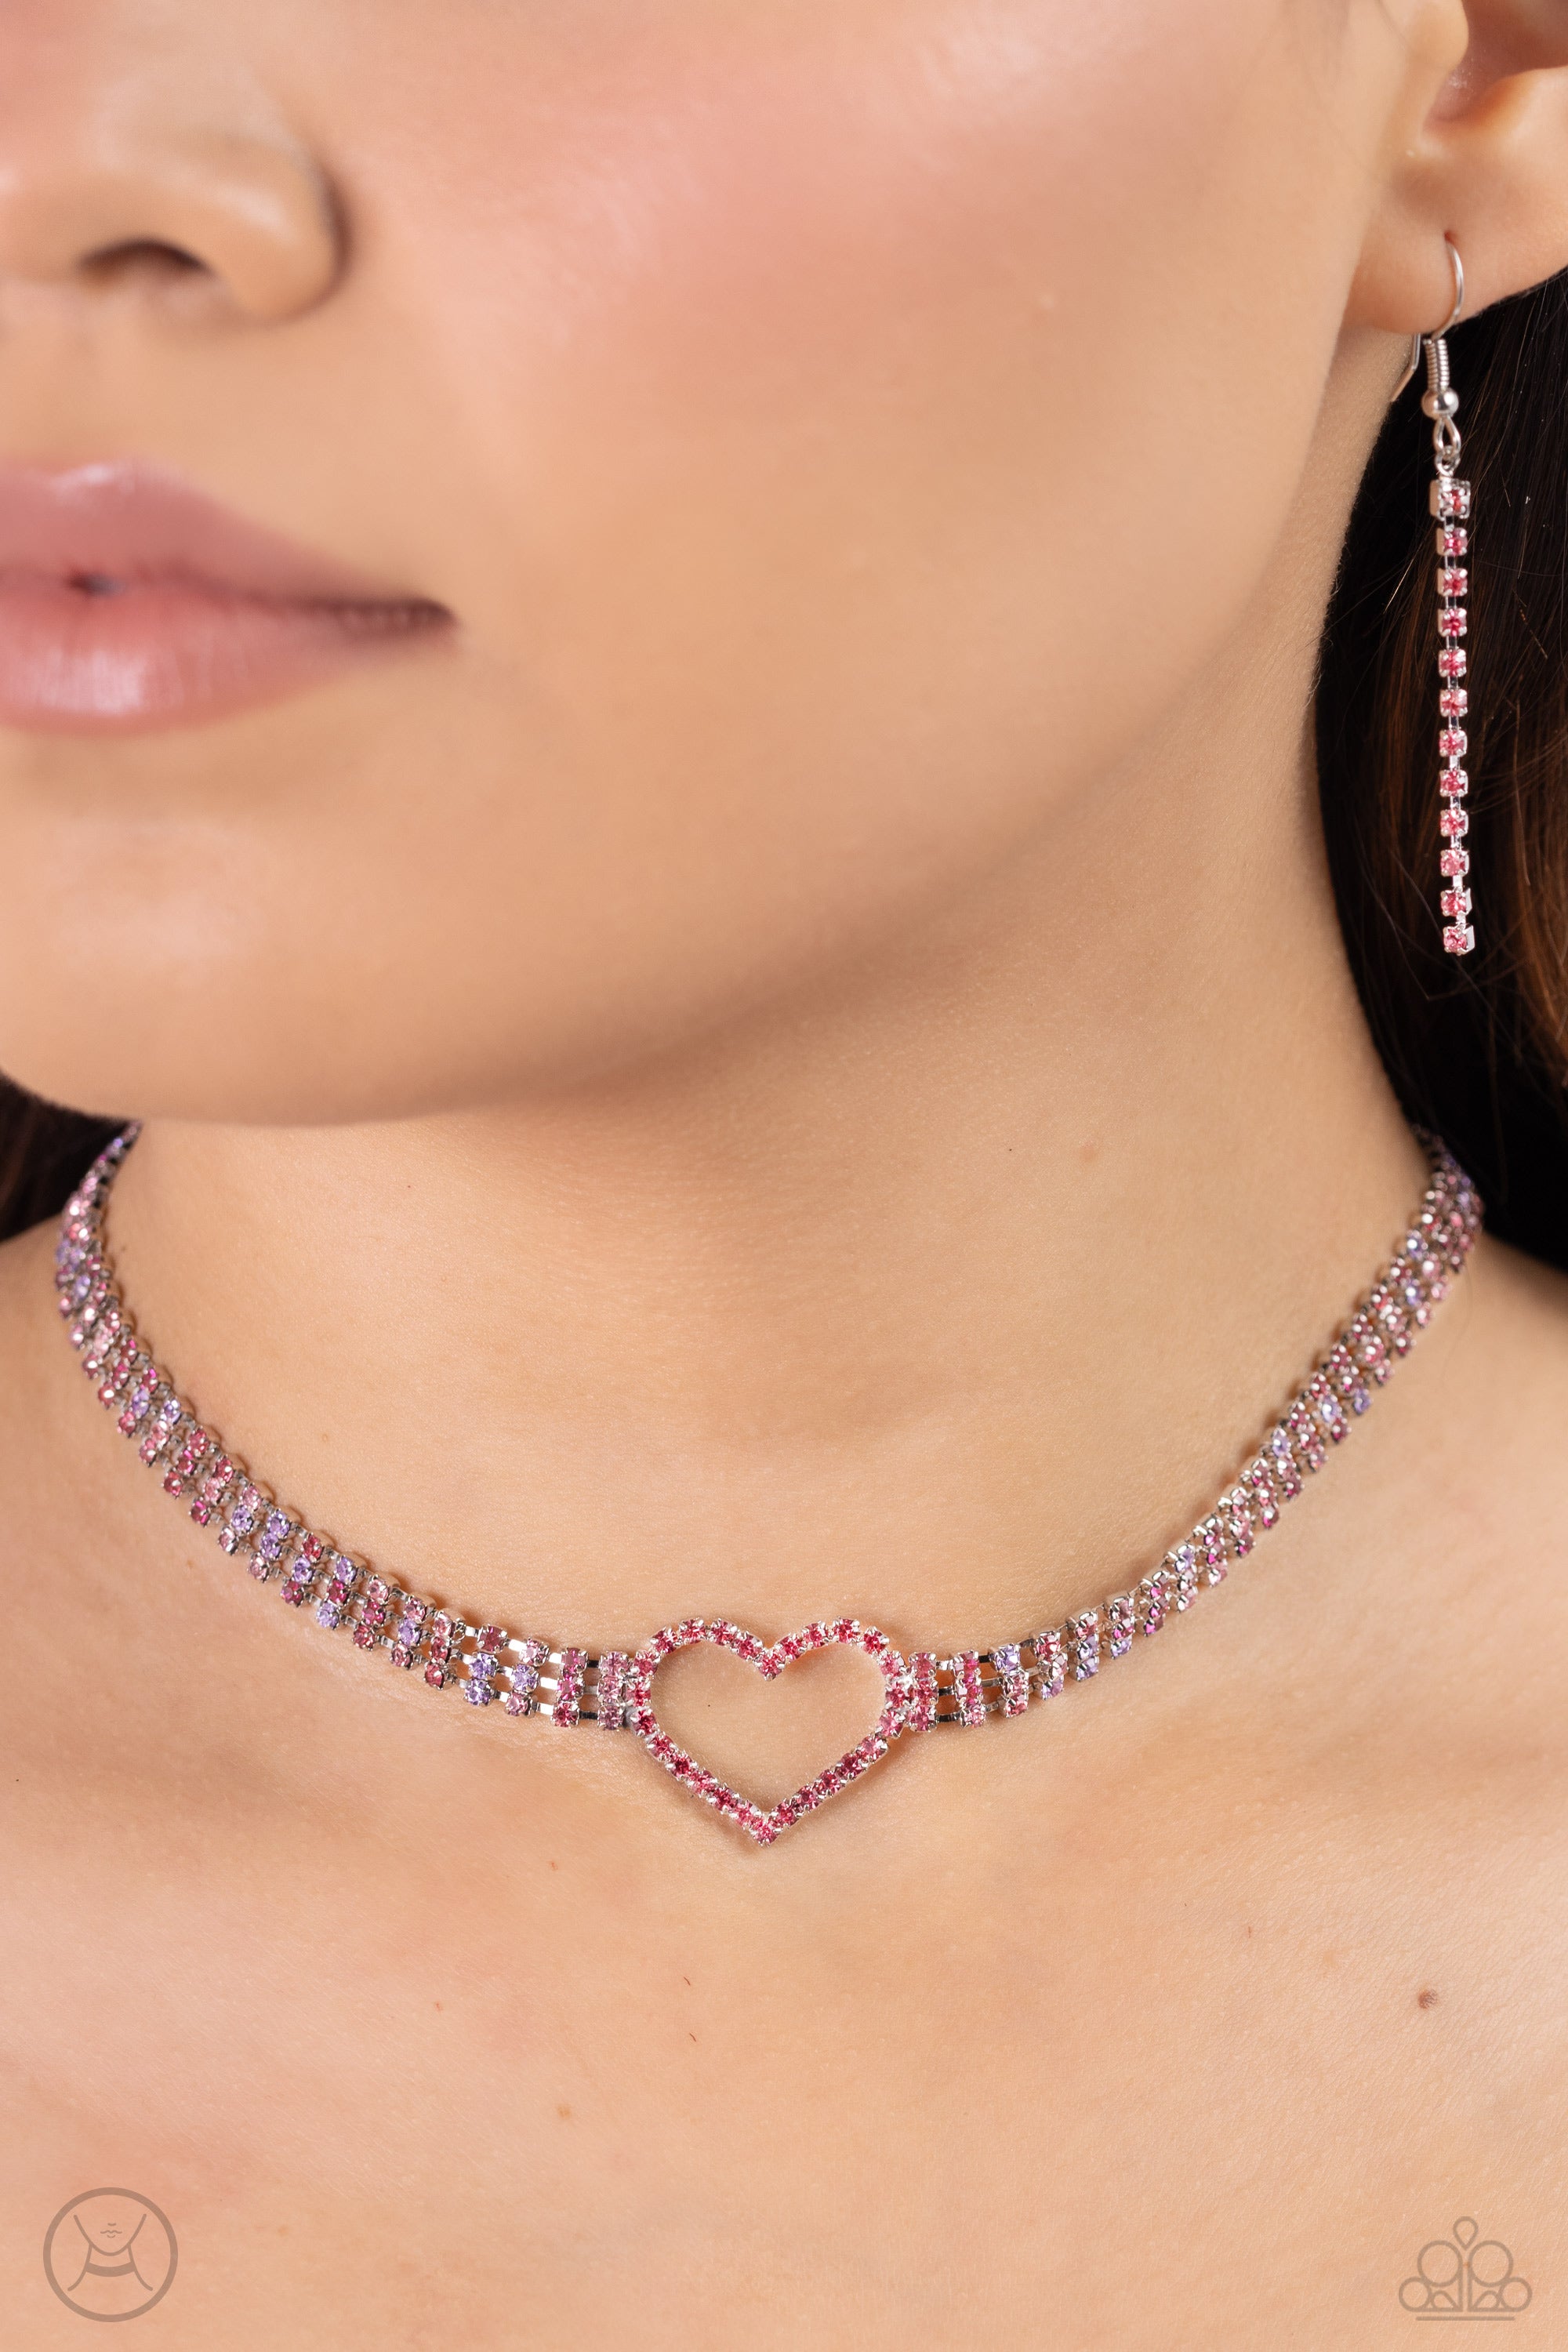 Rows of Romance Pink Rhinestone Heart Choker Necklace - Paparazzi Accessories- lightbox - CarasShop.com - $5 Jewelry by Cara Jewels